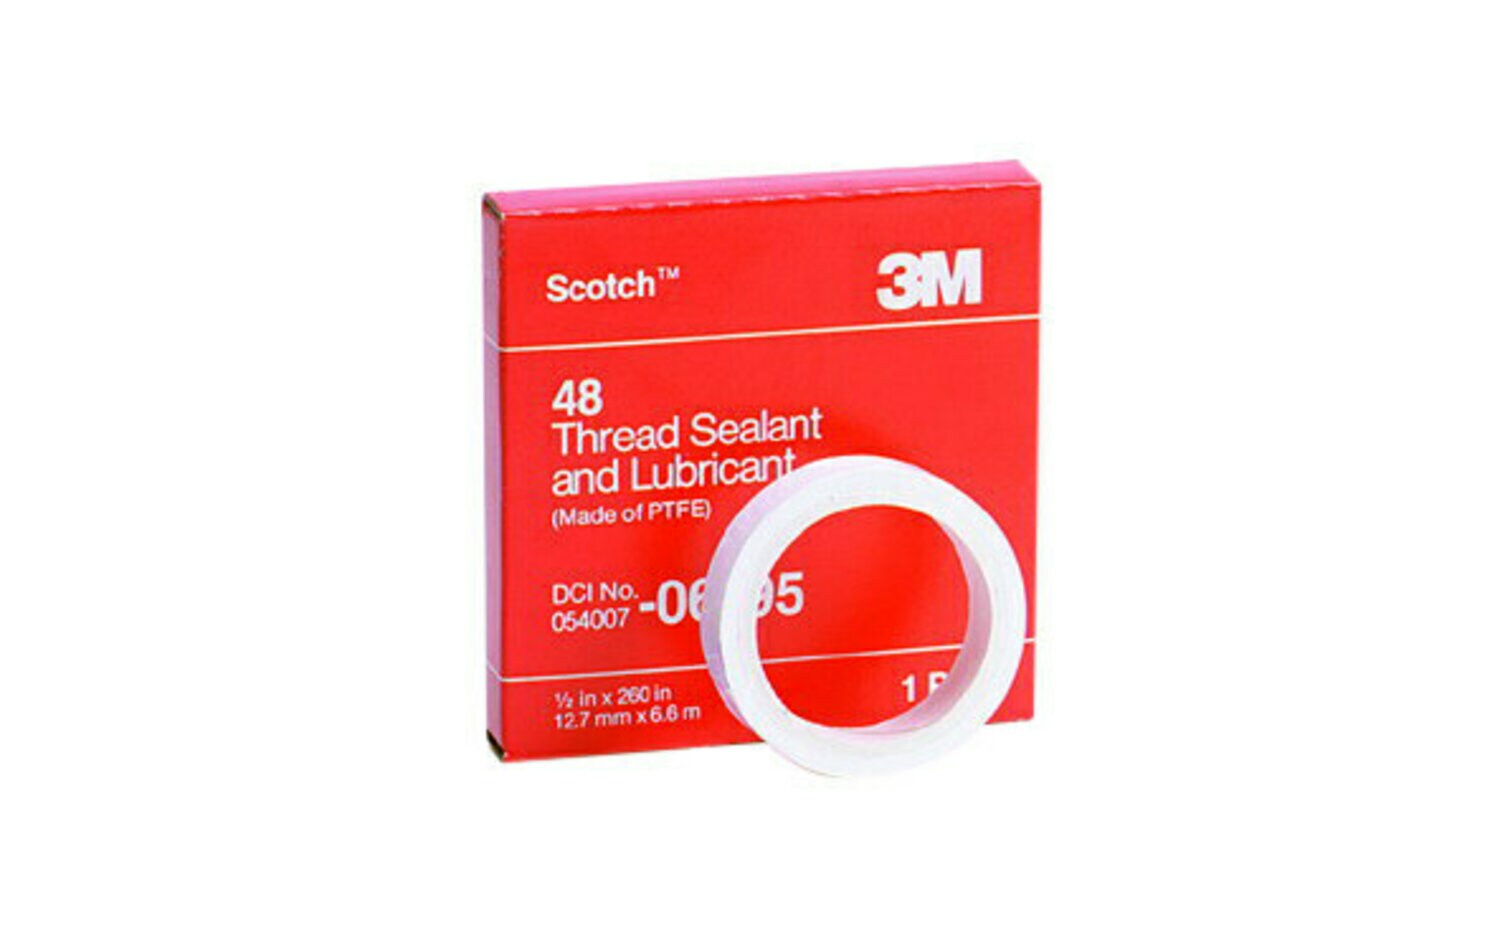 7000005819 - Scotch Thread Sealant and Lubricant 48, 1/2" x 260" in box, 12
Rolls/Case